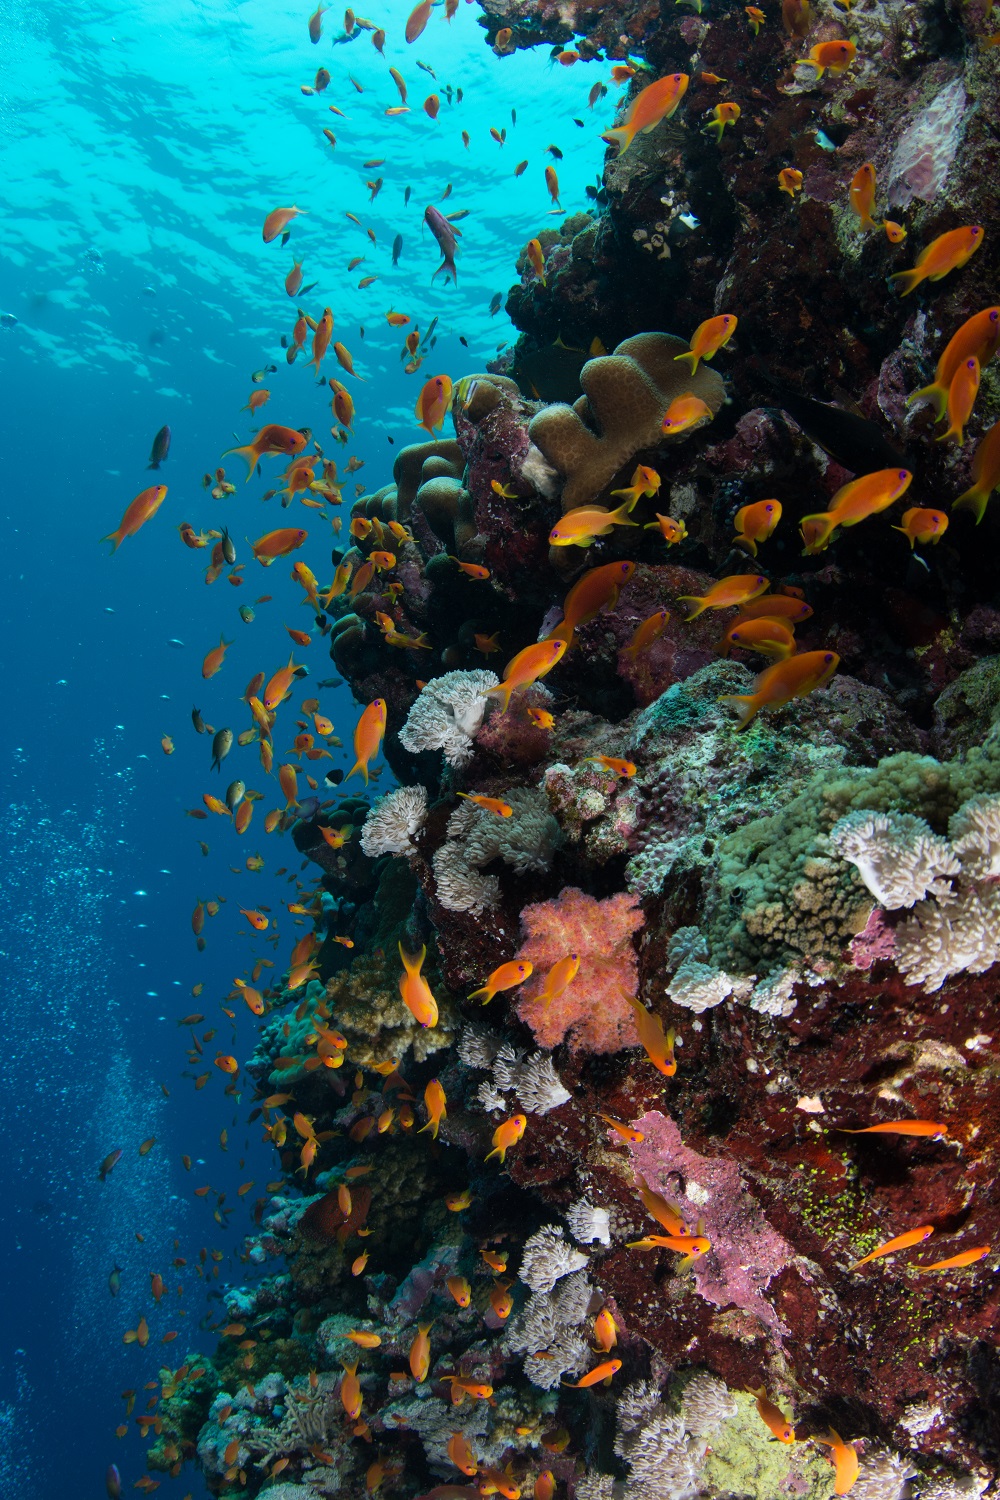 Coral reef ecosystem in Sudan.